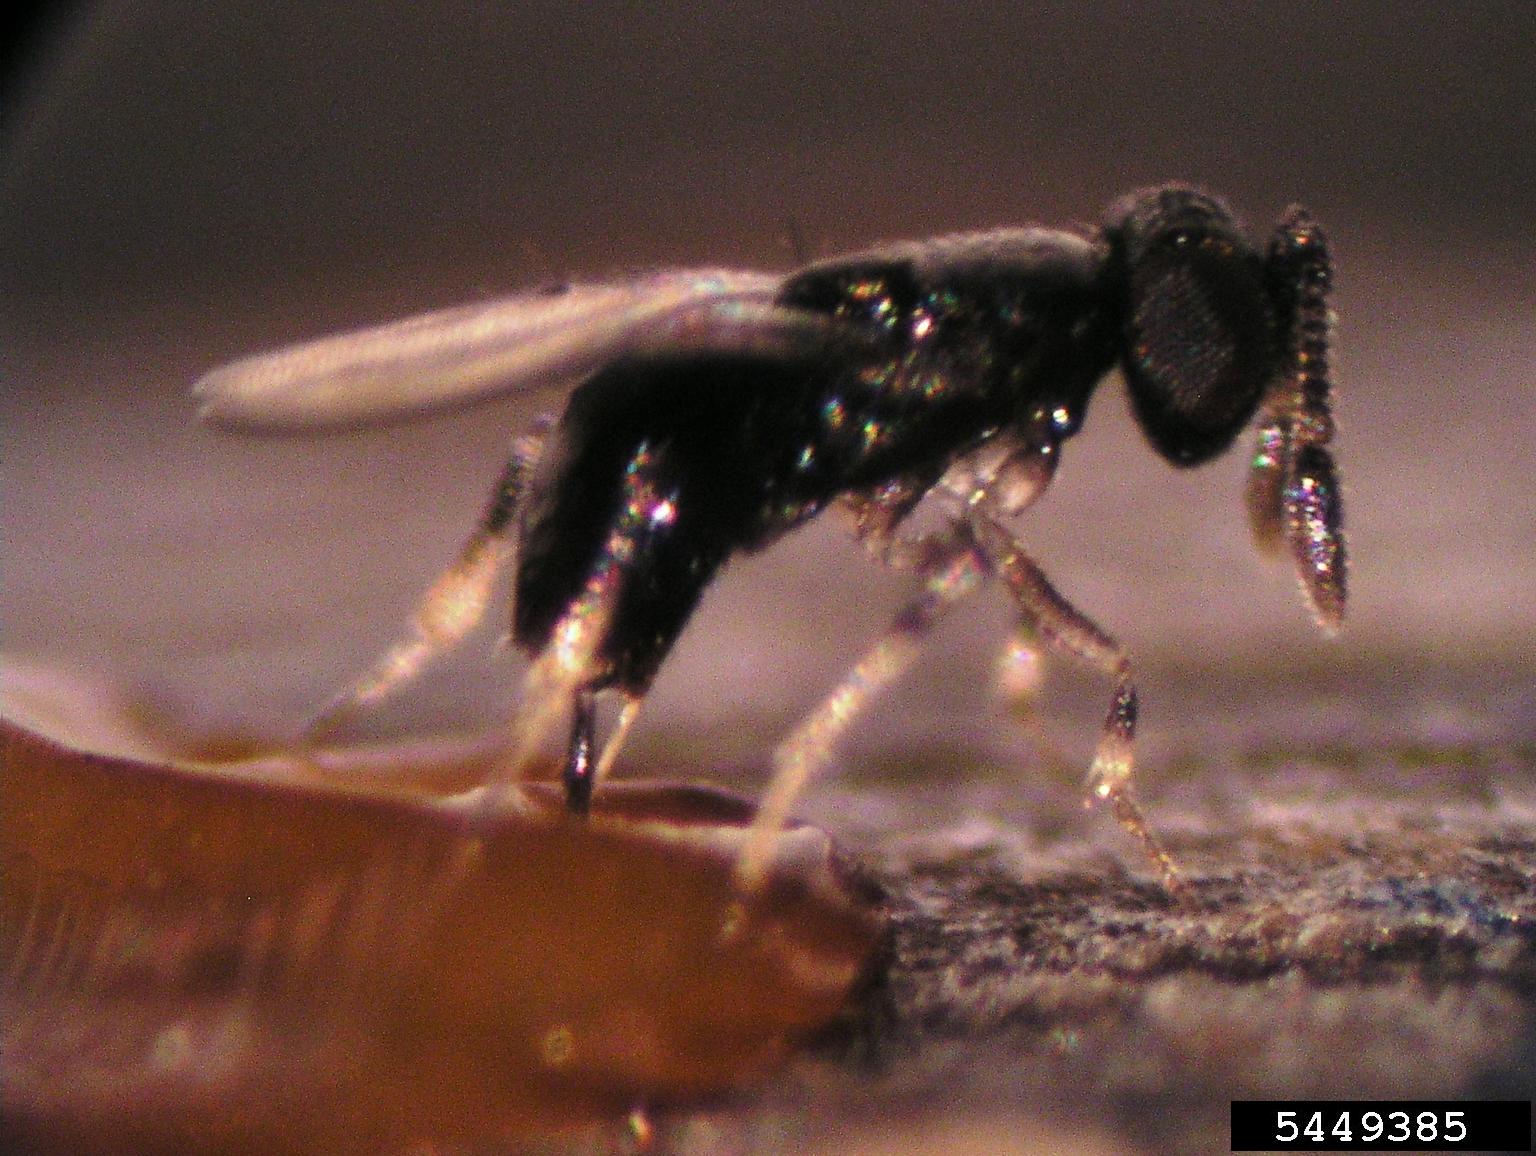 Photo: An adult Oobius agrili wasp